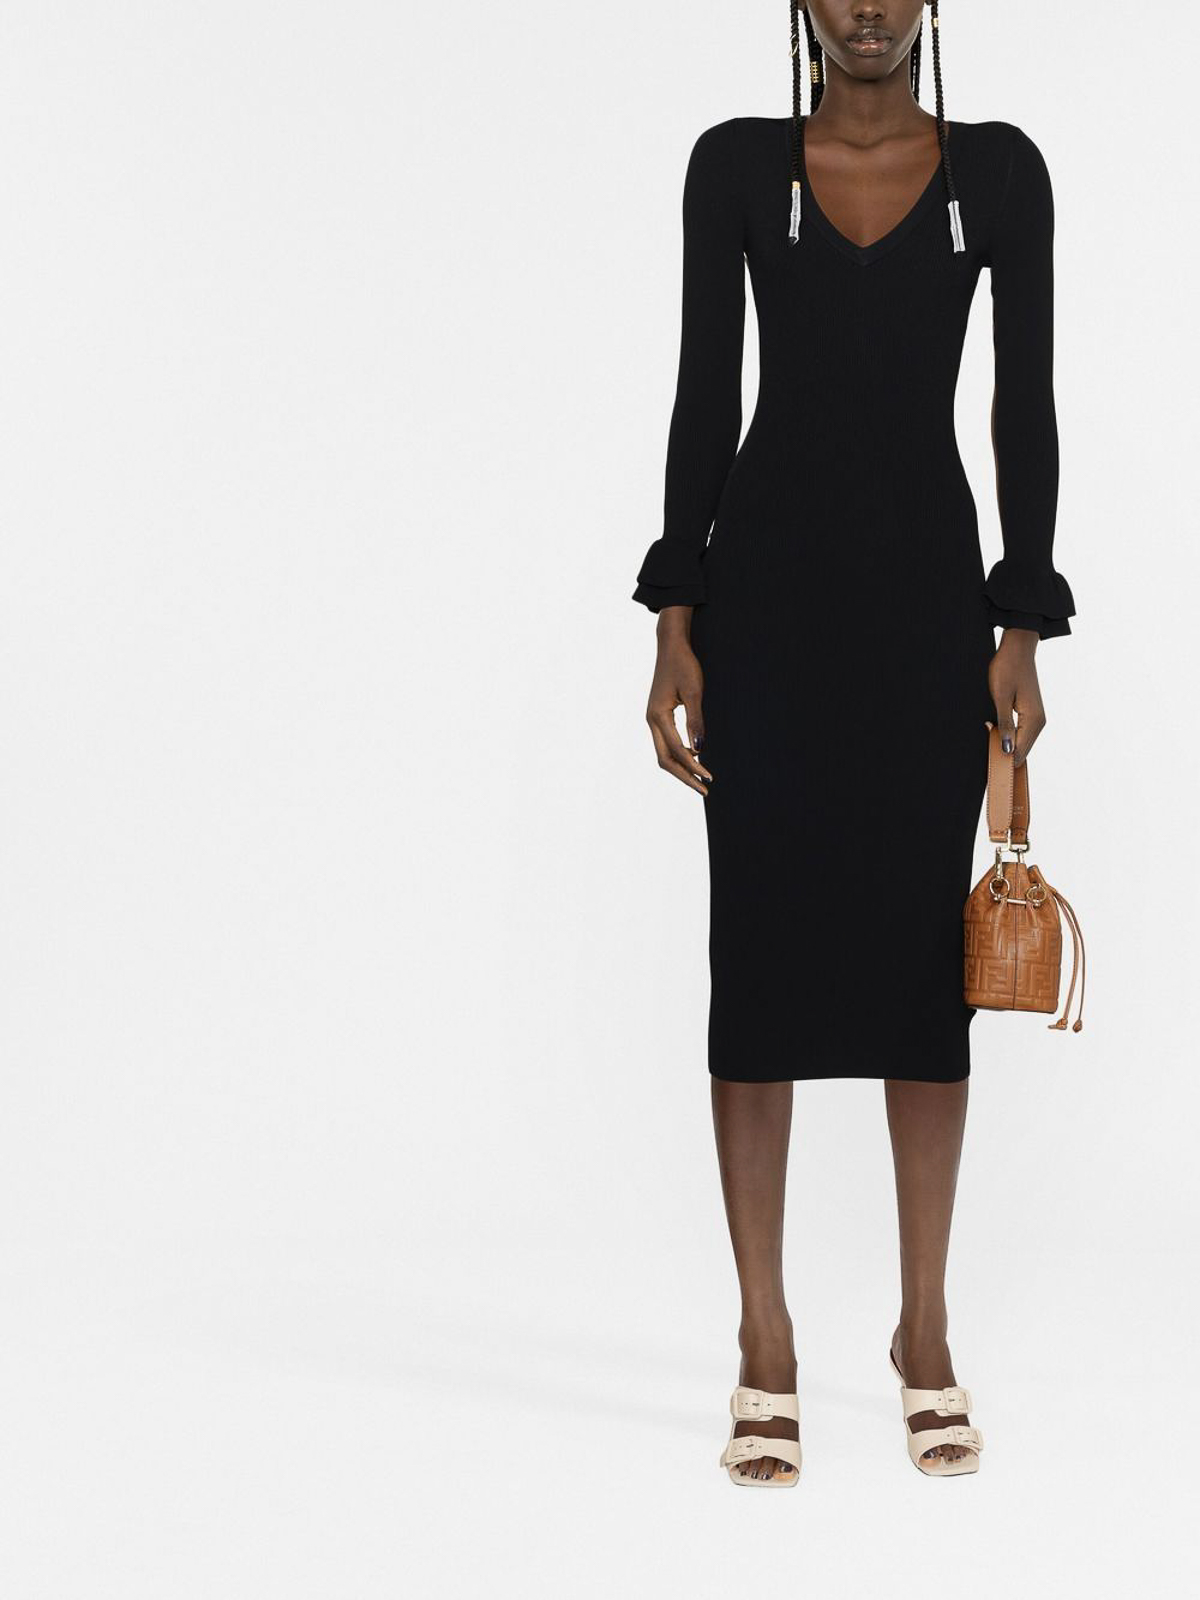 Michael Kors Collection  Black Sleeveless Ruched Midi Dress